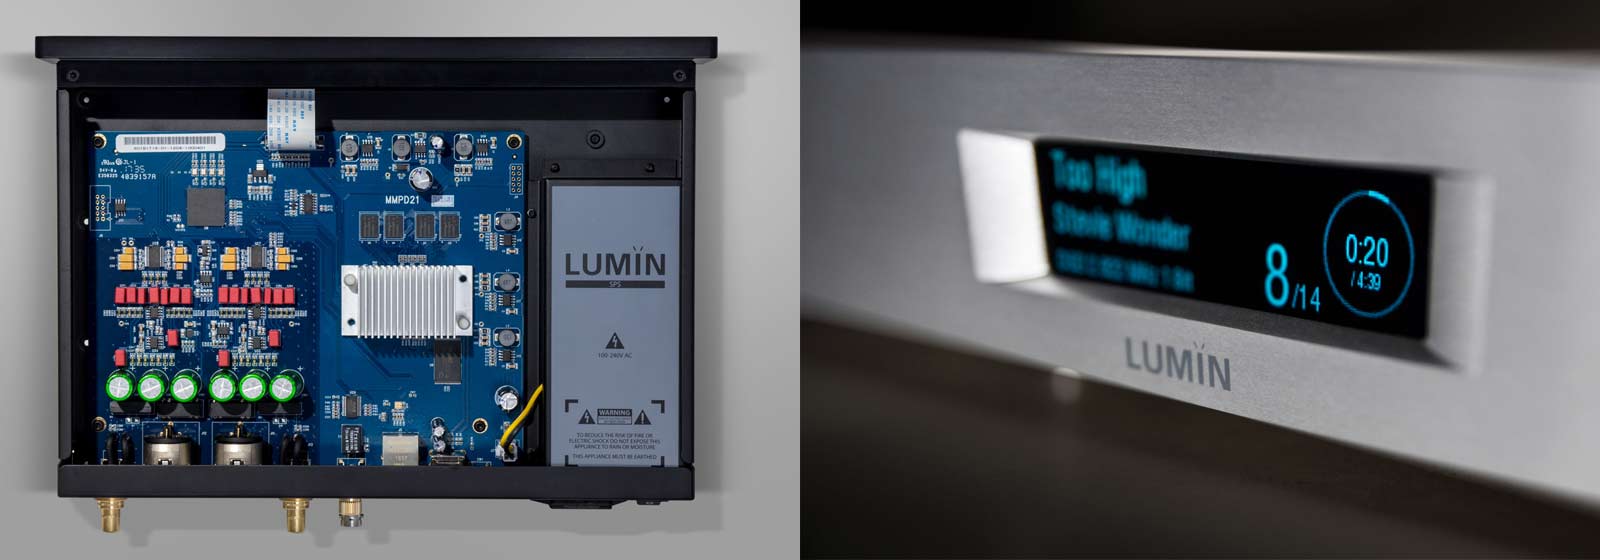 Lumin-D2-Network-streamer